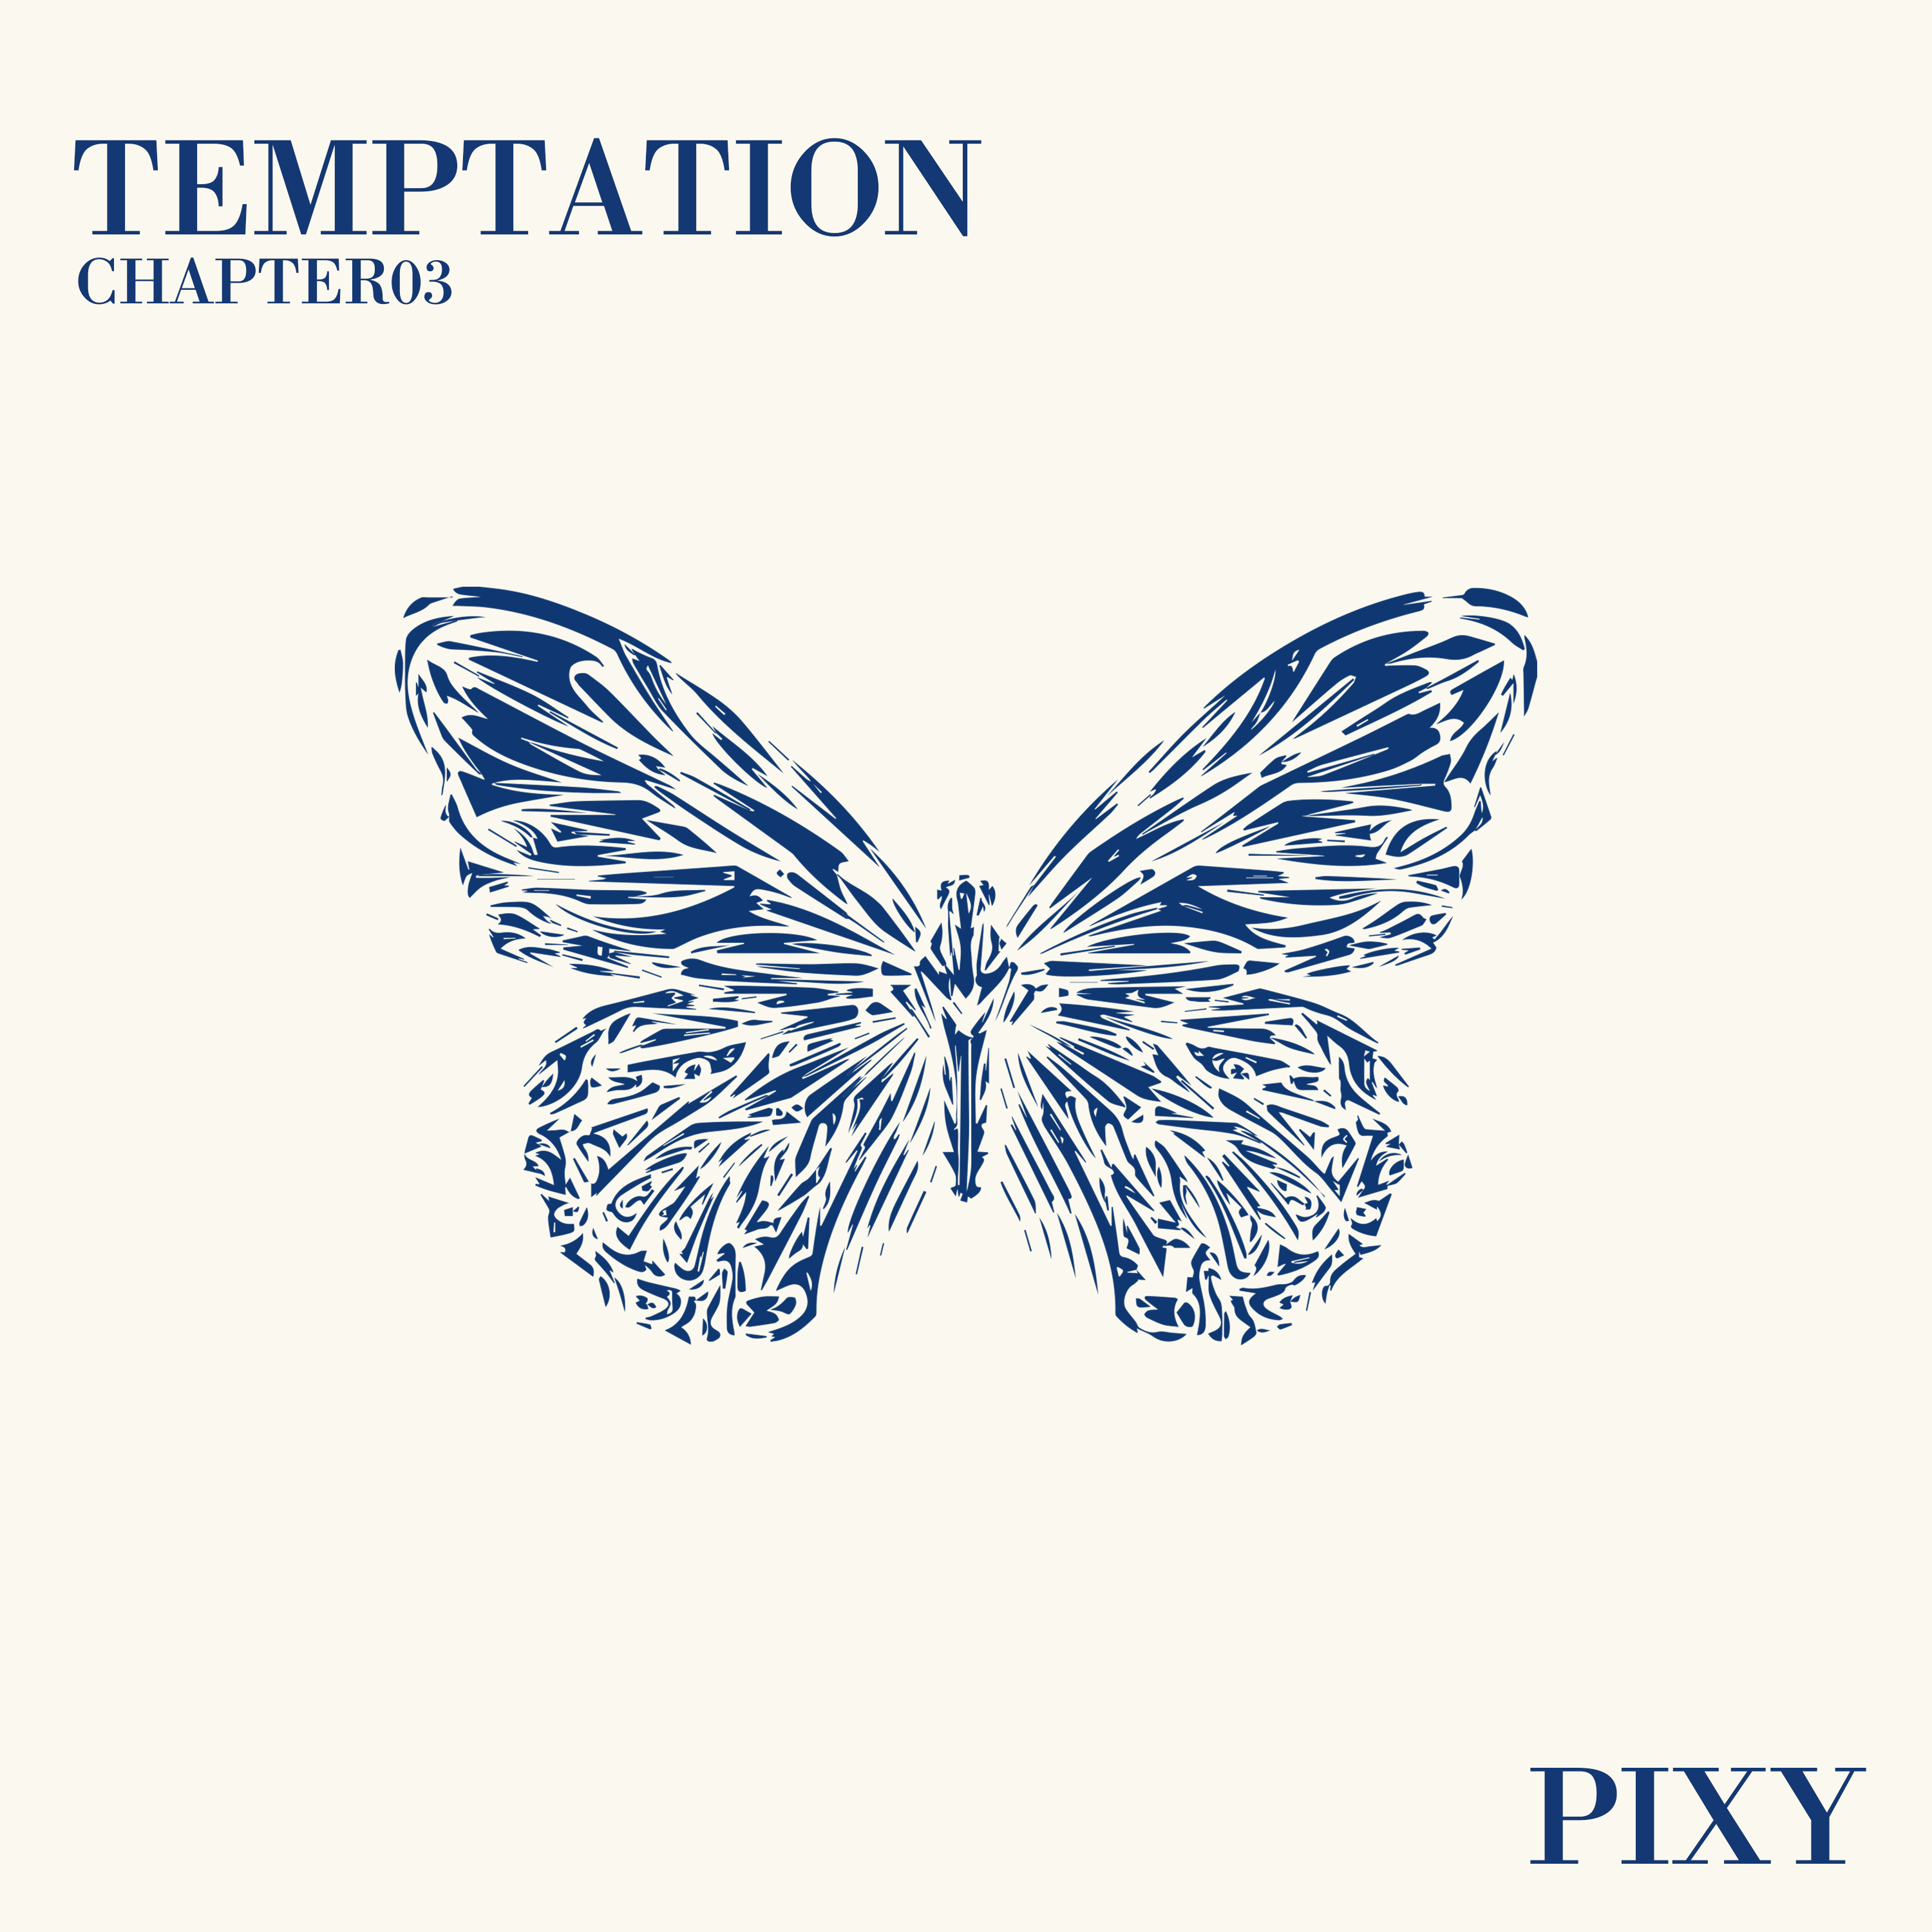 PIXY - TEMPTATION - KSHOPINA